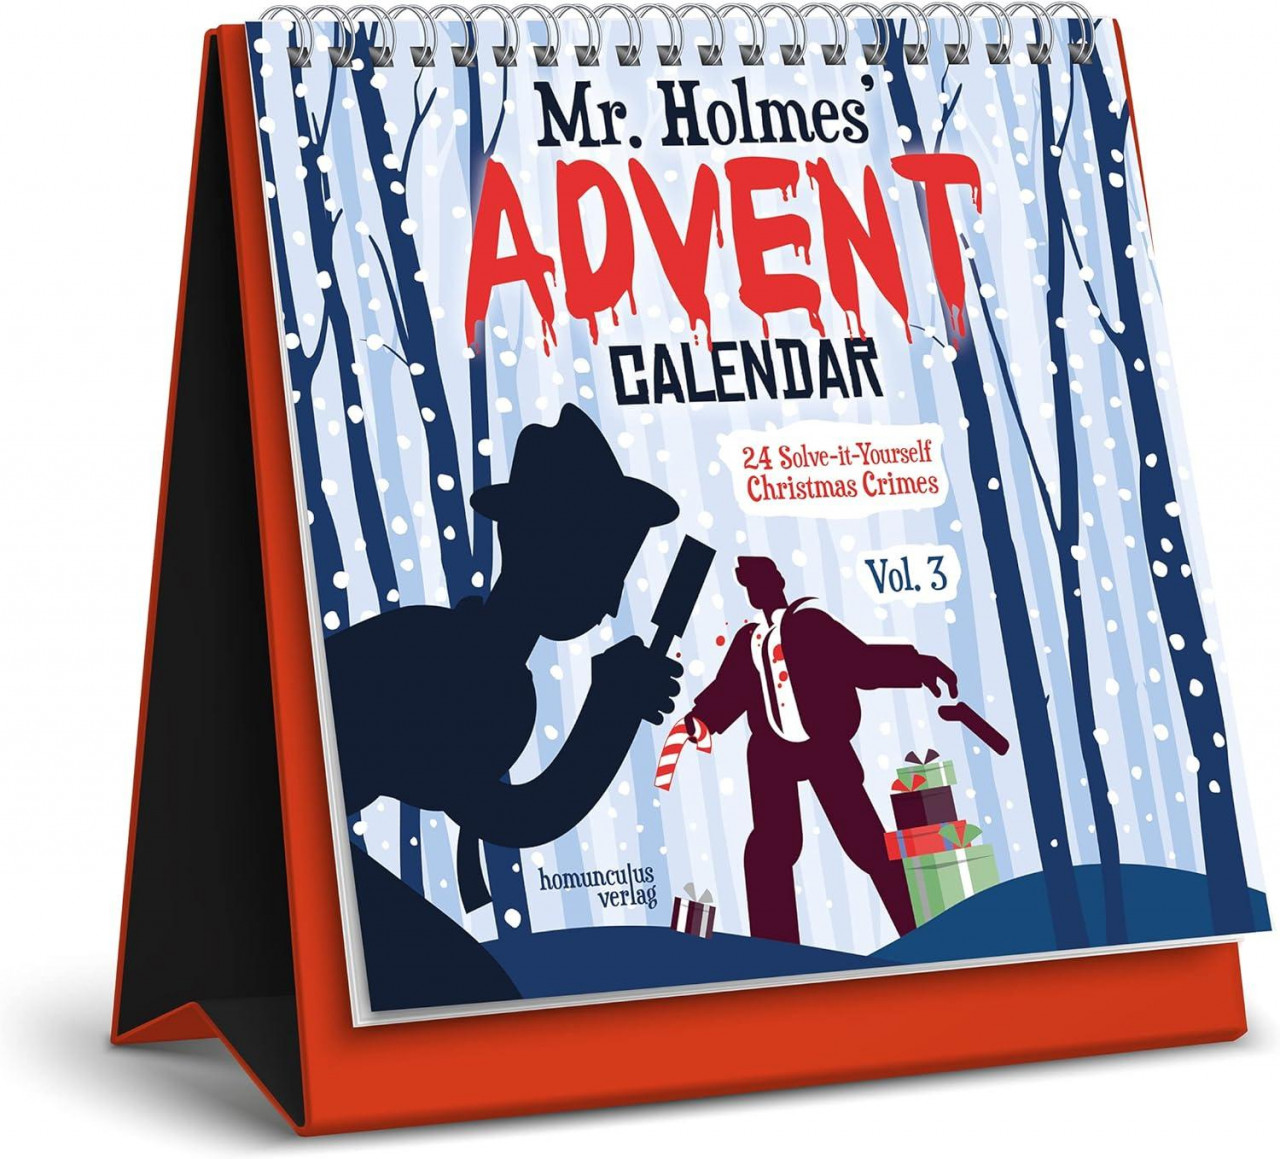 Mr Holmes' Advent Calendar, Vol. 3: 24 Solve-it-Yourself Christmas Crimes